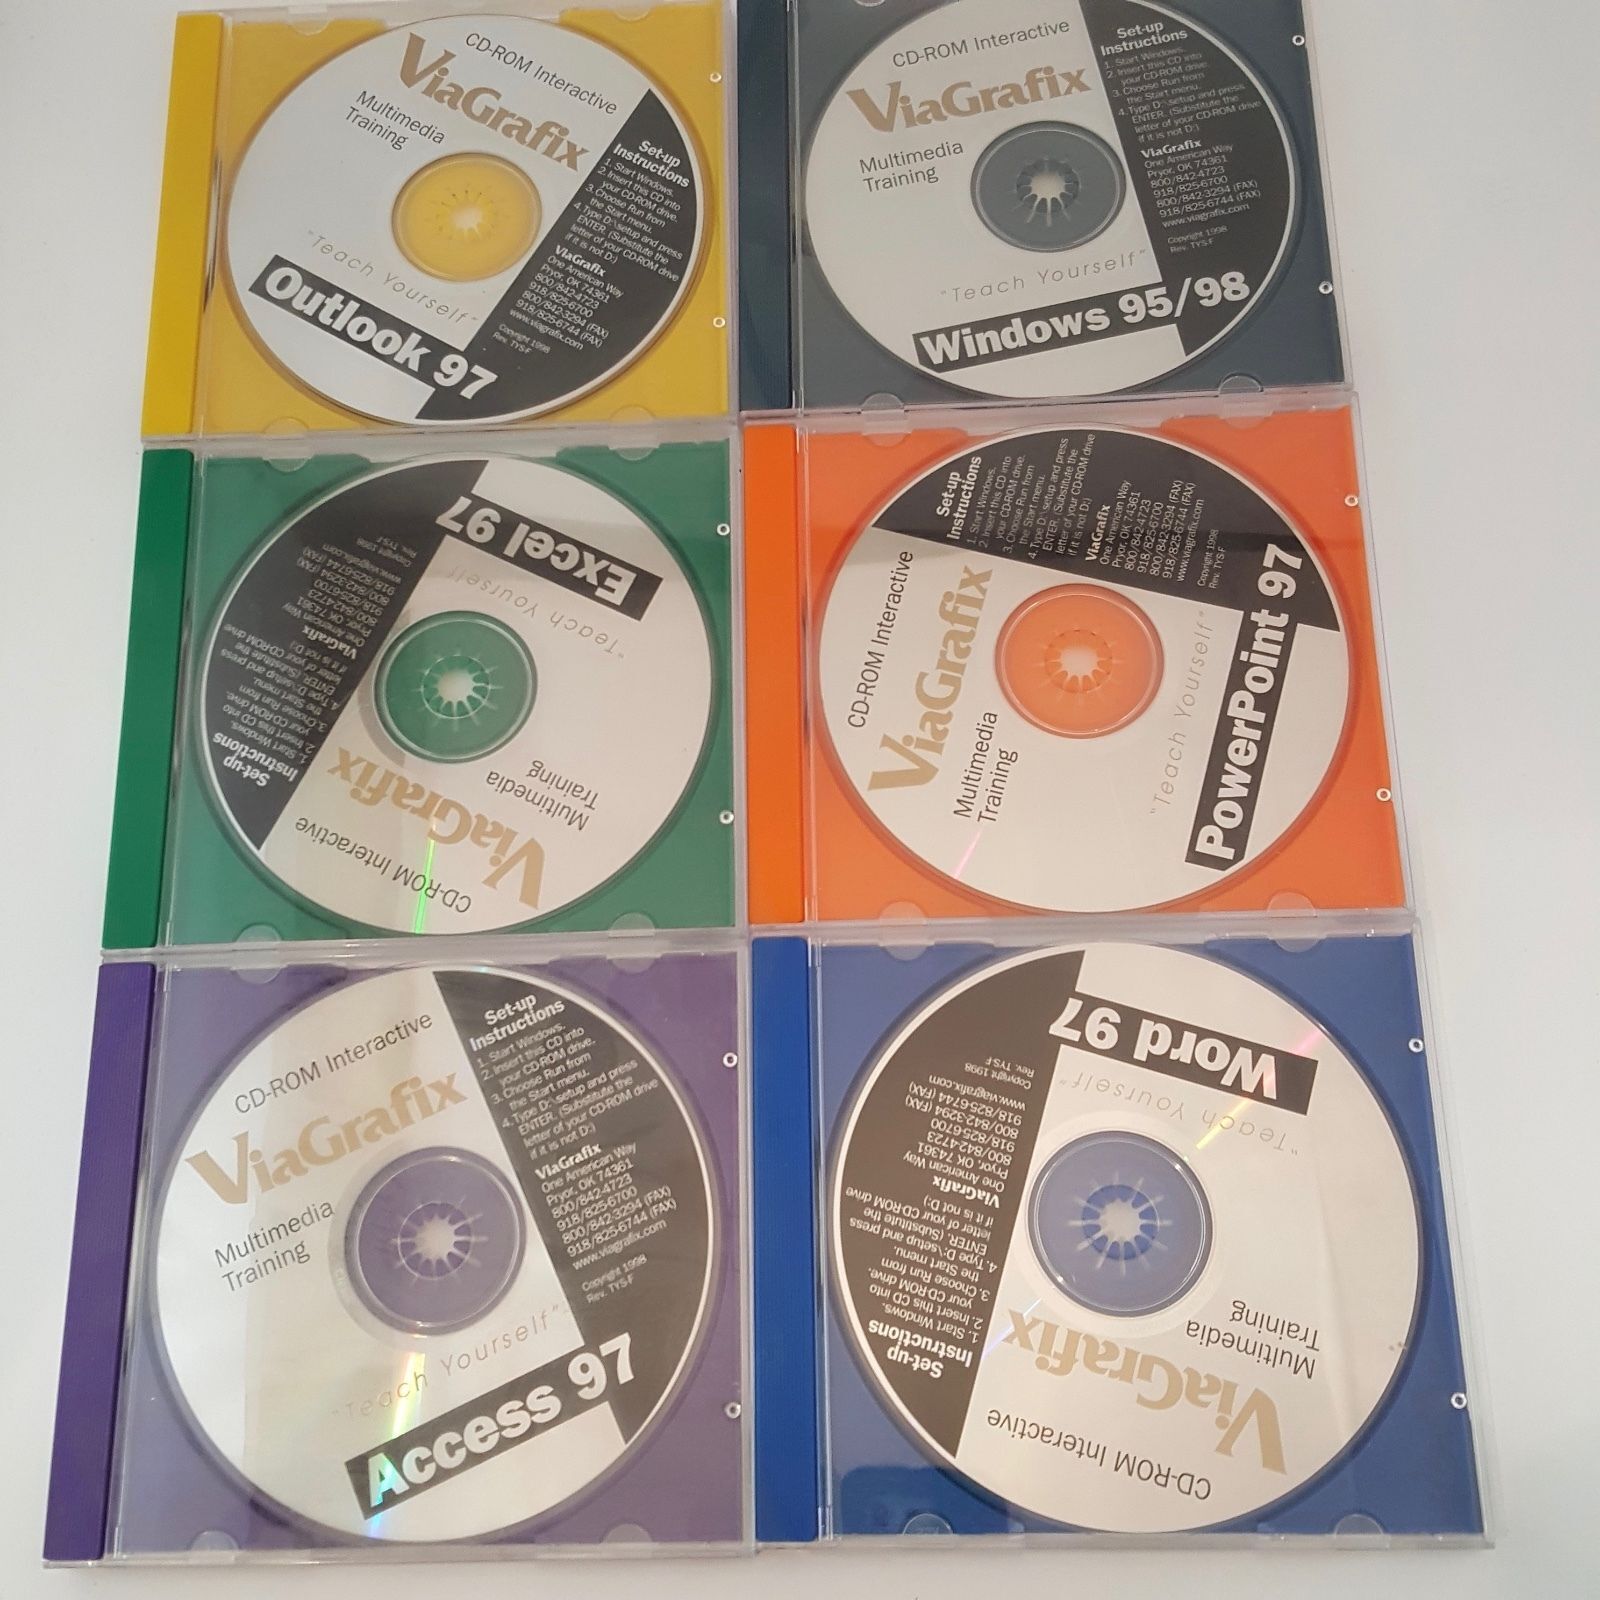 ViaGrafix Office 97 & Windows CD-ROM Multimedia Tutorials Training Interactive 